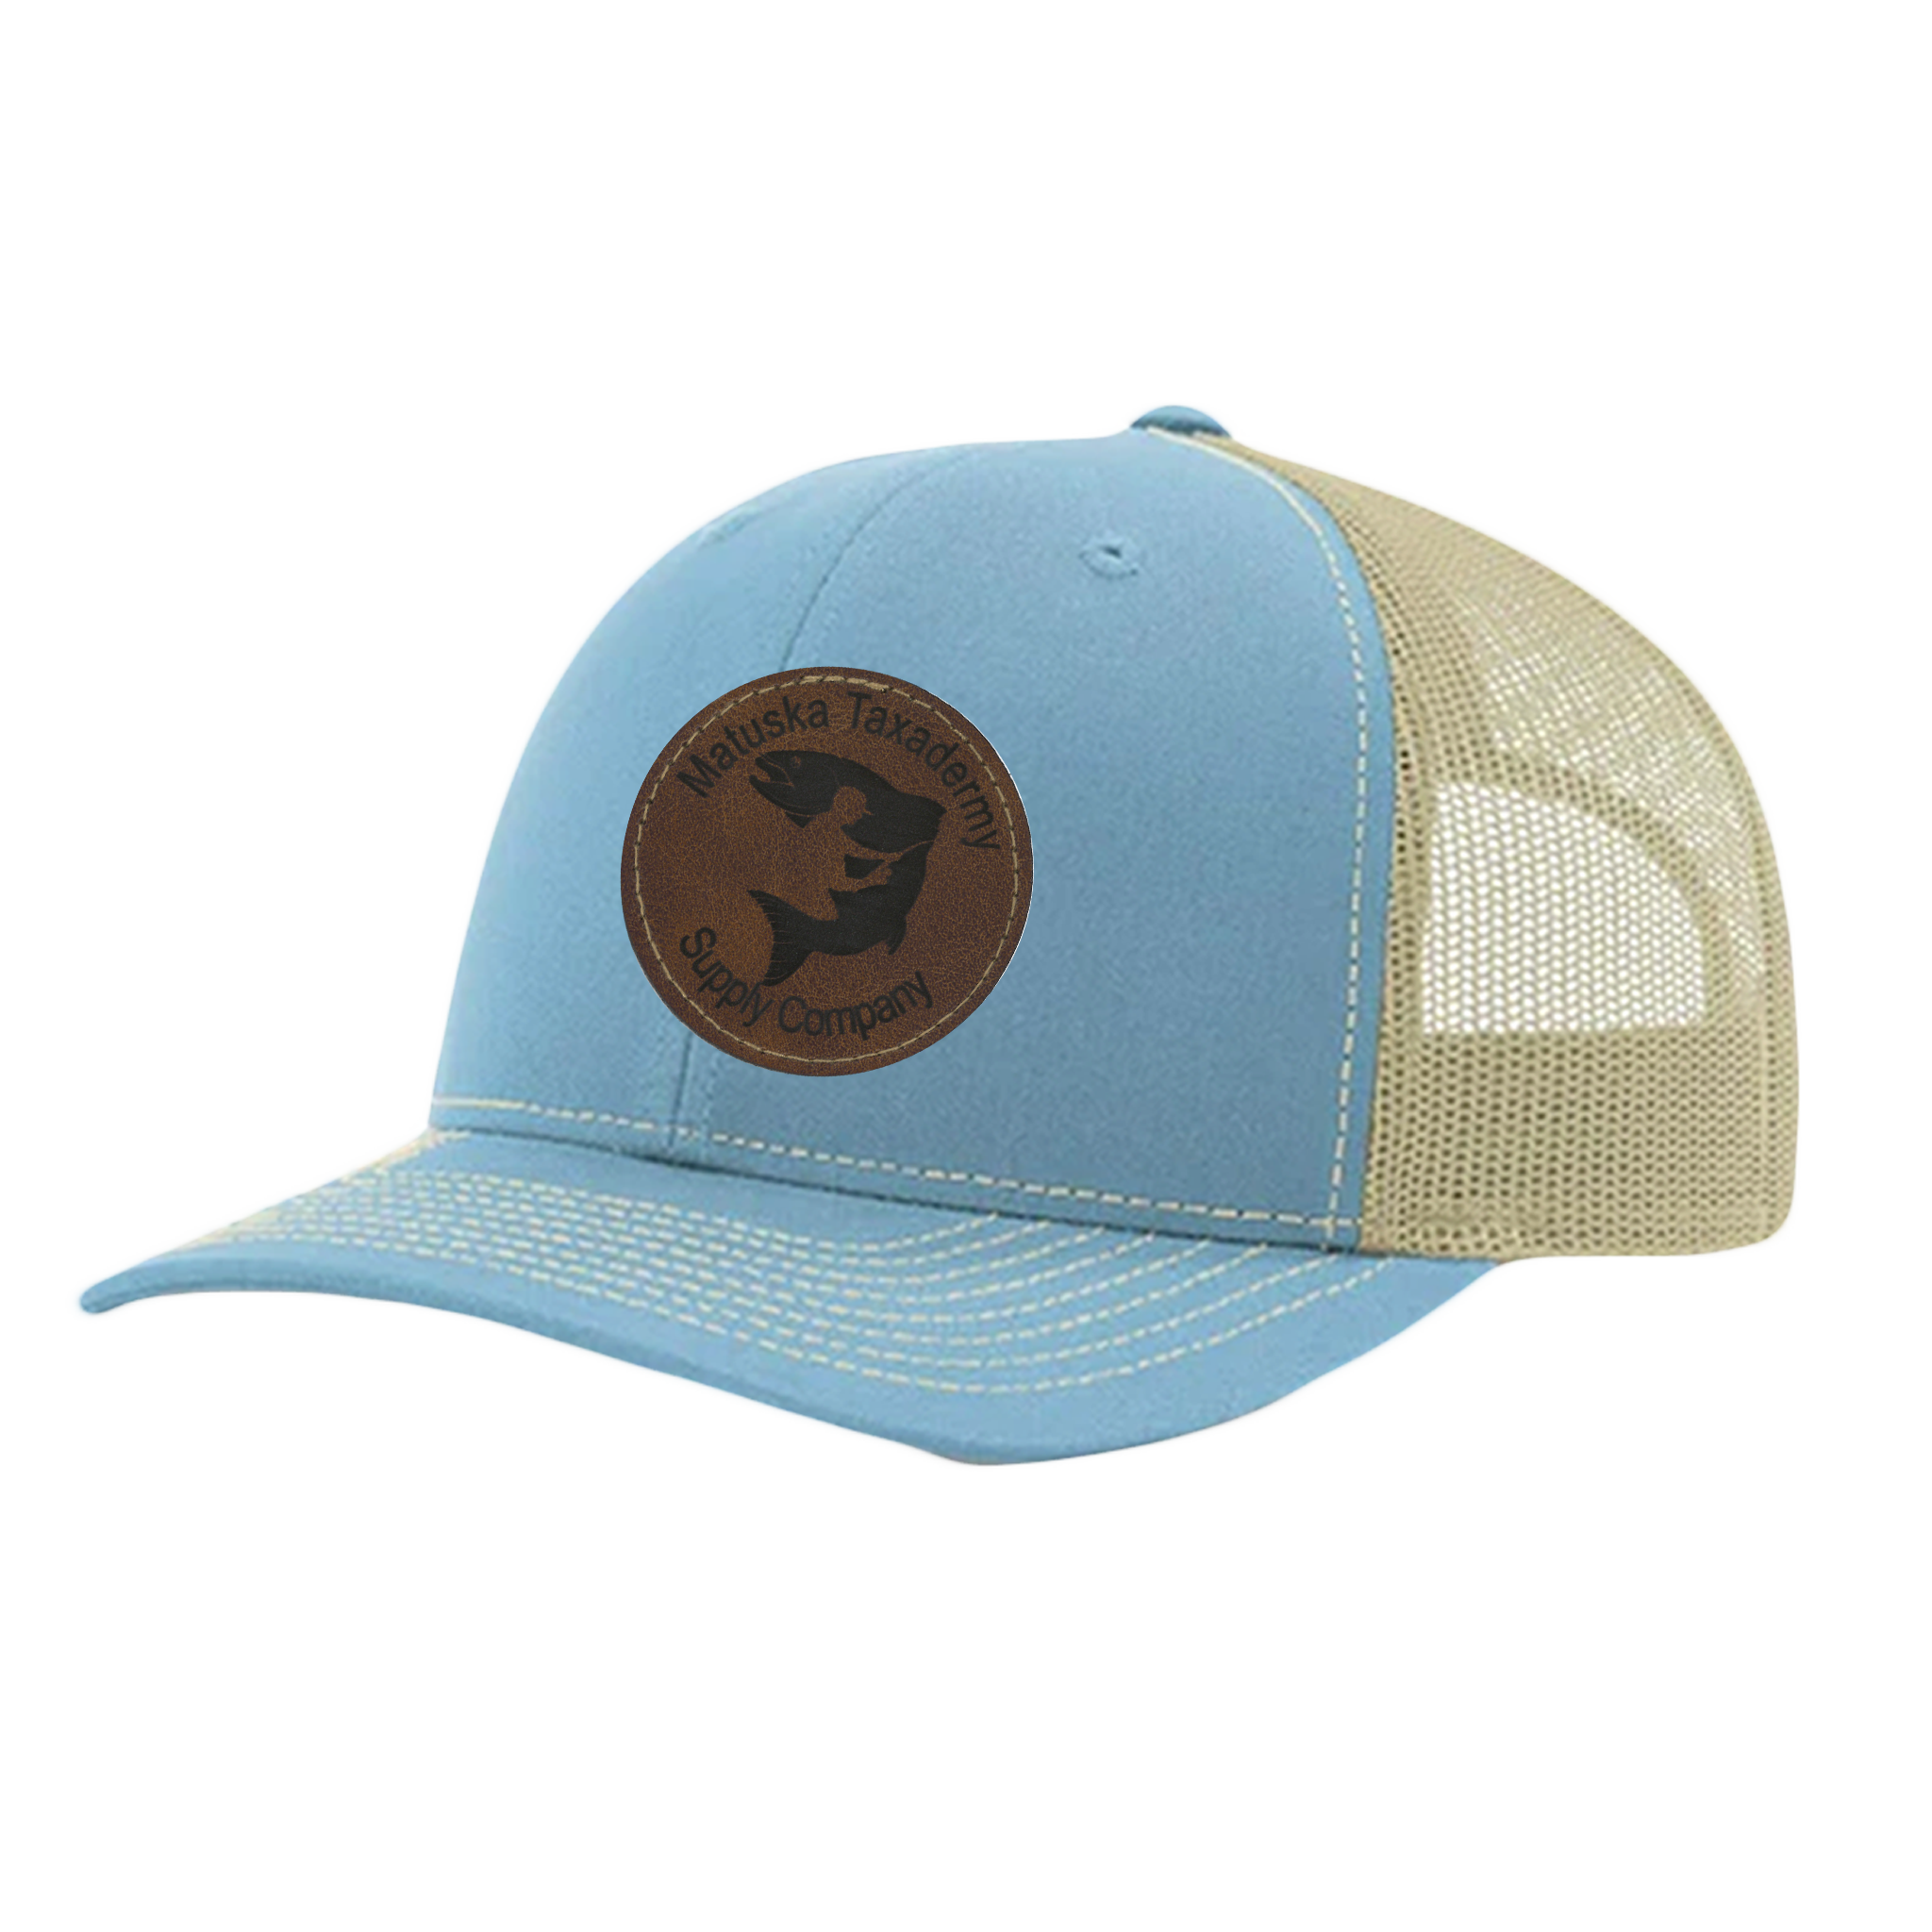 Richardson 112 Trucker Hat - Light Blue & Tan (Fish Patch)